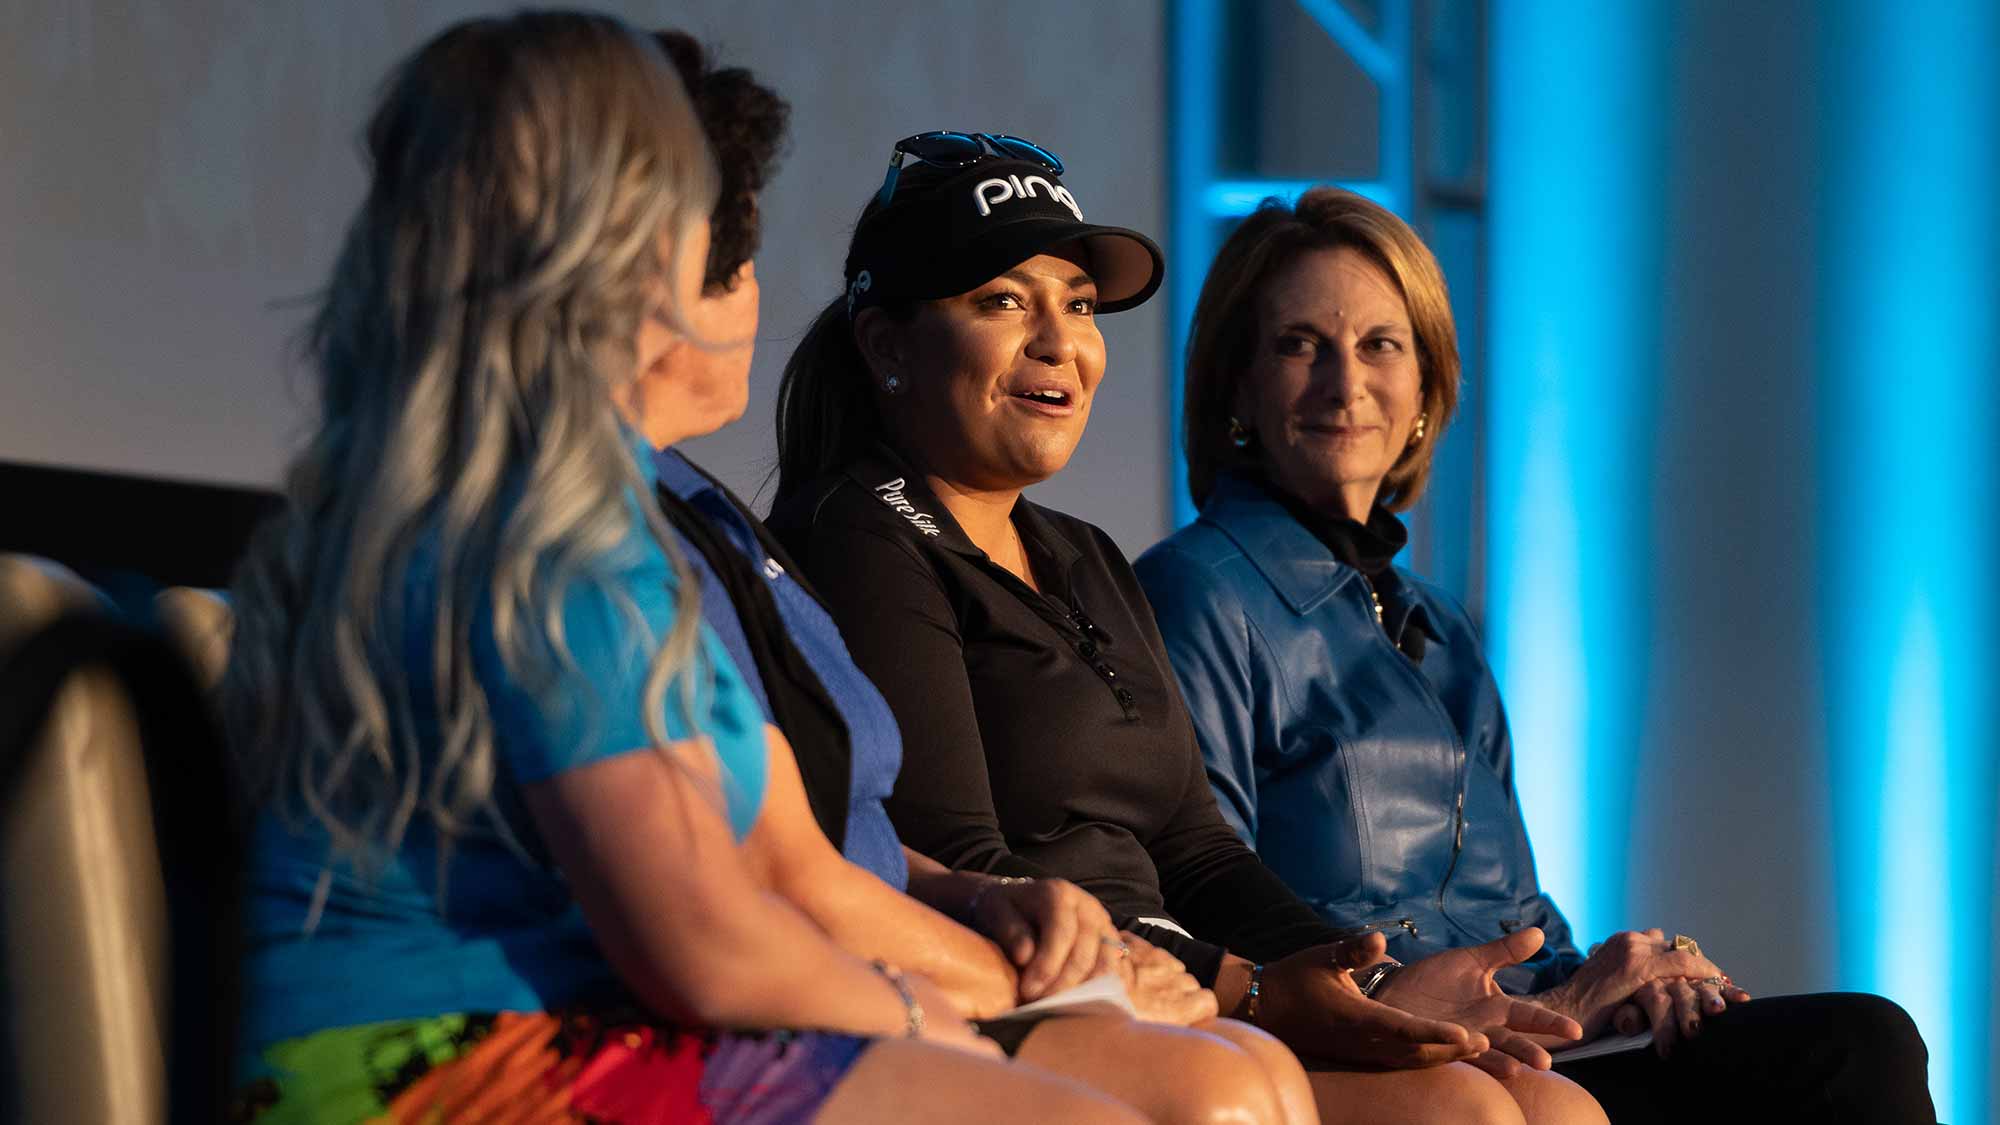 Lizette Salas speaks during the LPGA Announcement of new brand positioning encouraging girls to #DriveOn at JW Marriott Phoenix Desert Ridge on March 20, 2019 in Phoenix, Arizona